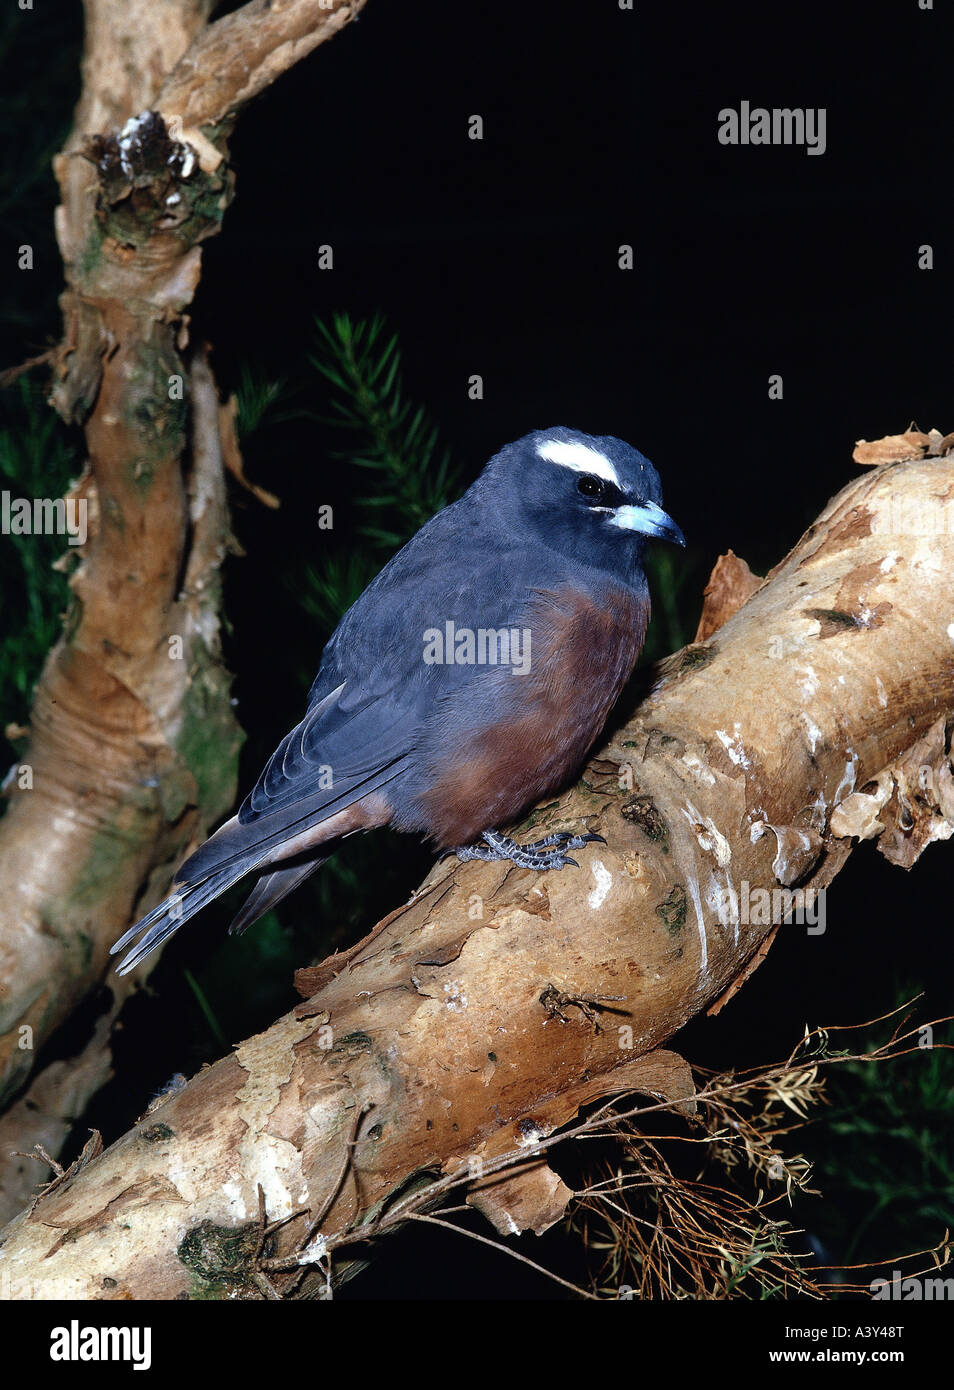 zoology / animals, avian / birds, White-browed Woodswallow, (Artamus superciliosus), sitting on branch, close-up, distribution: Stock Photo